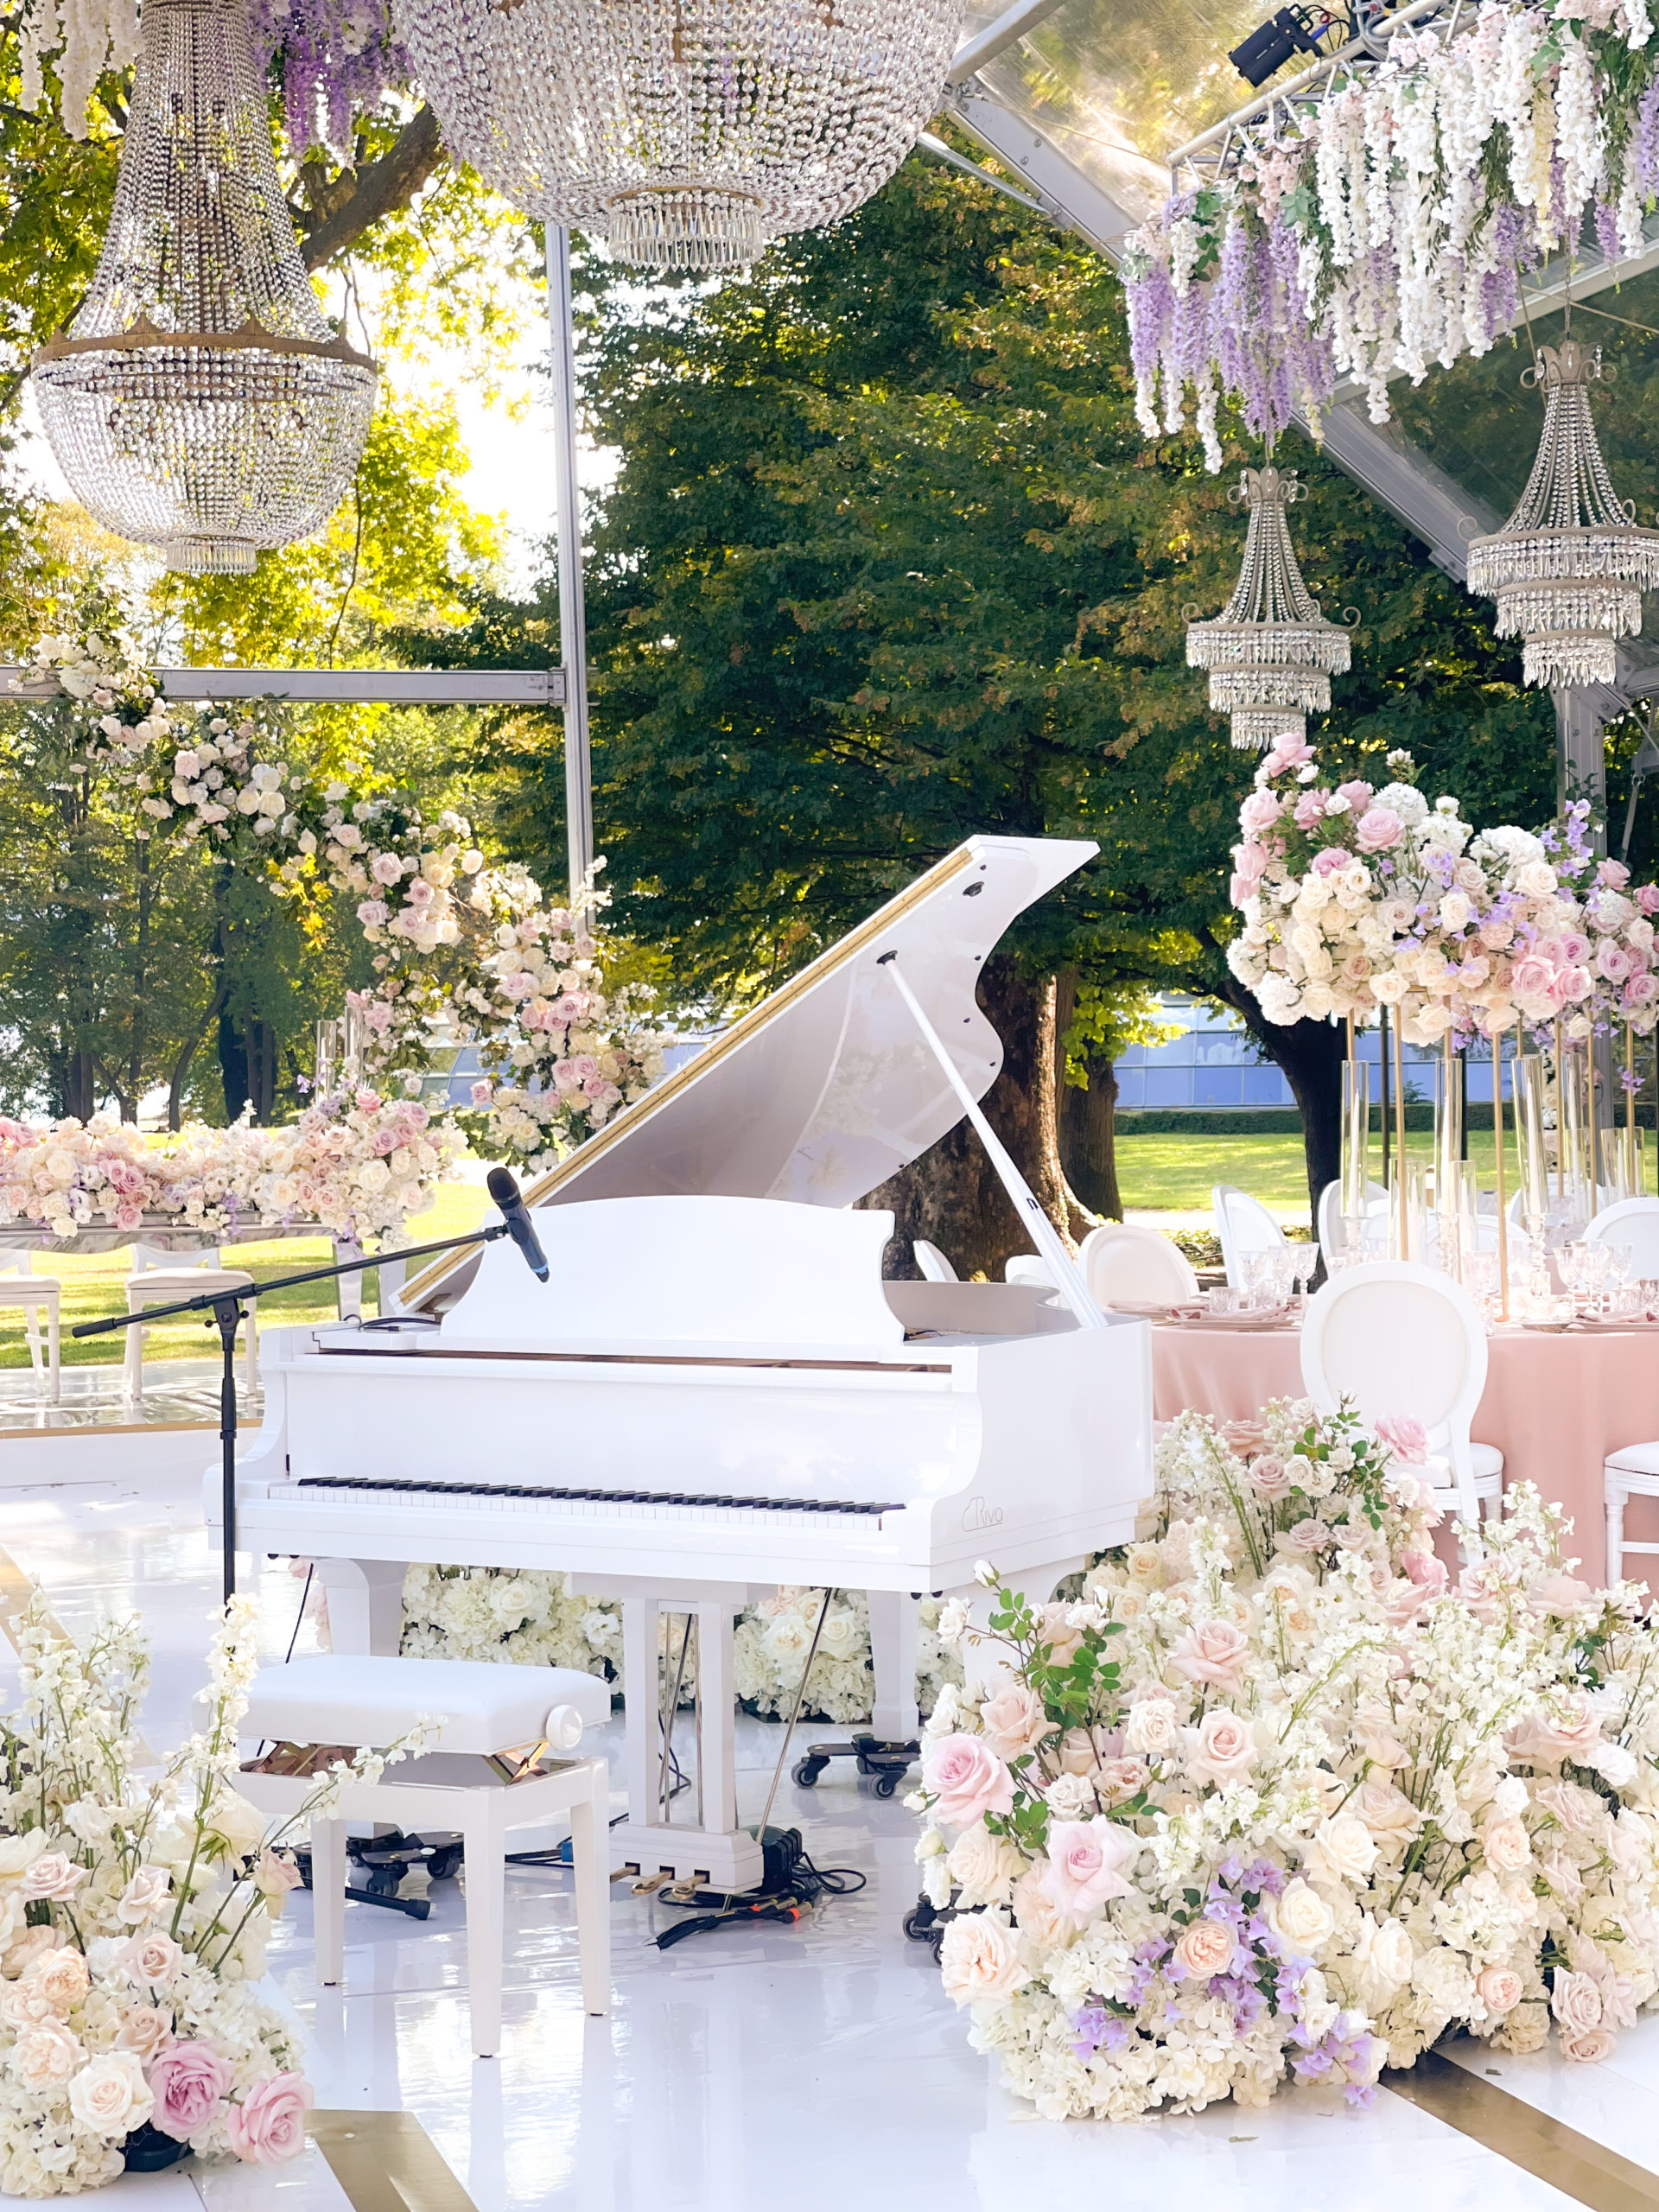 villa-erba-como-lake-matrimonio-allestimento-pianoforte-rose